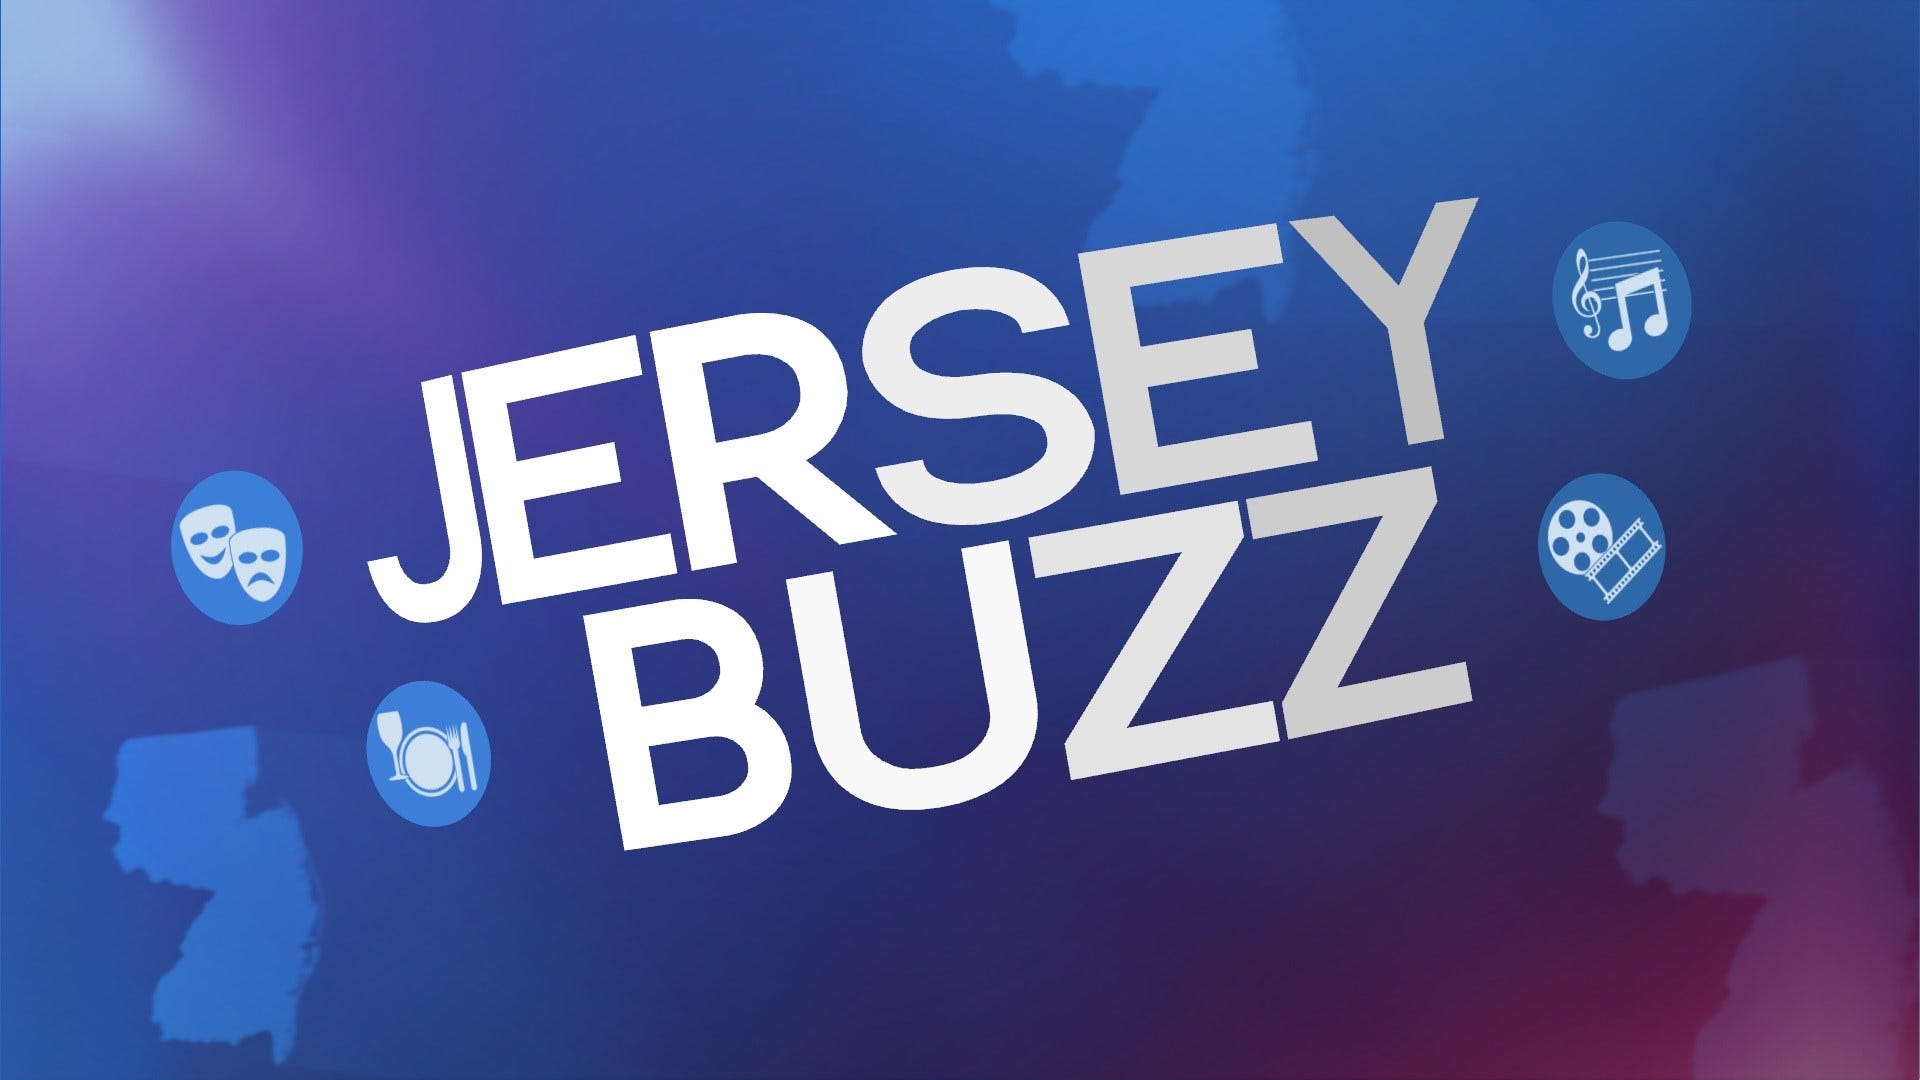 Burgundy Fleur-de-Lis? Mixed Reactions to Jersey Honoring Québec